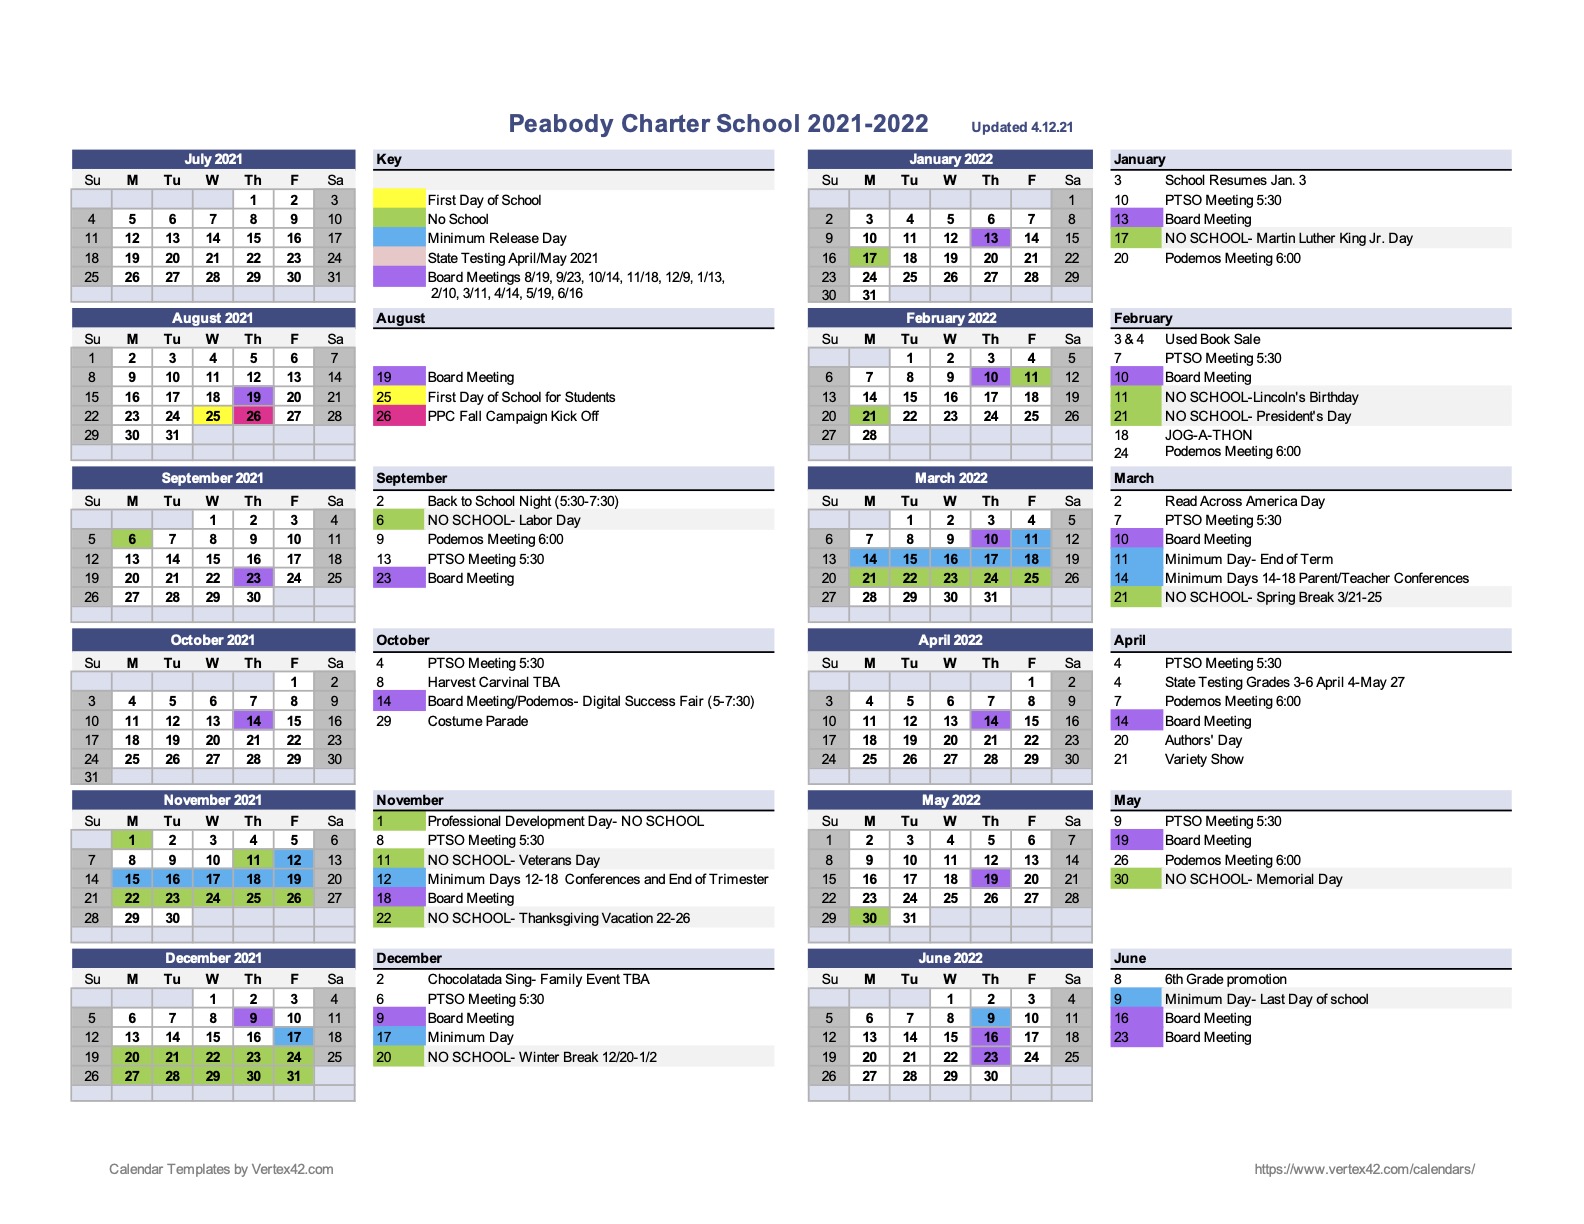 Peabody Academic Calendar 2022 Calendar | Peabody